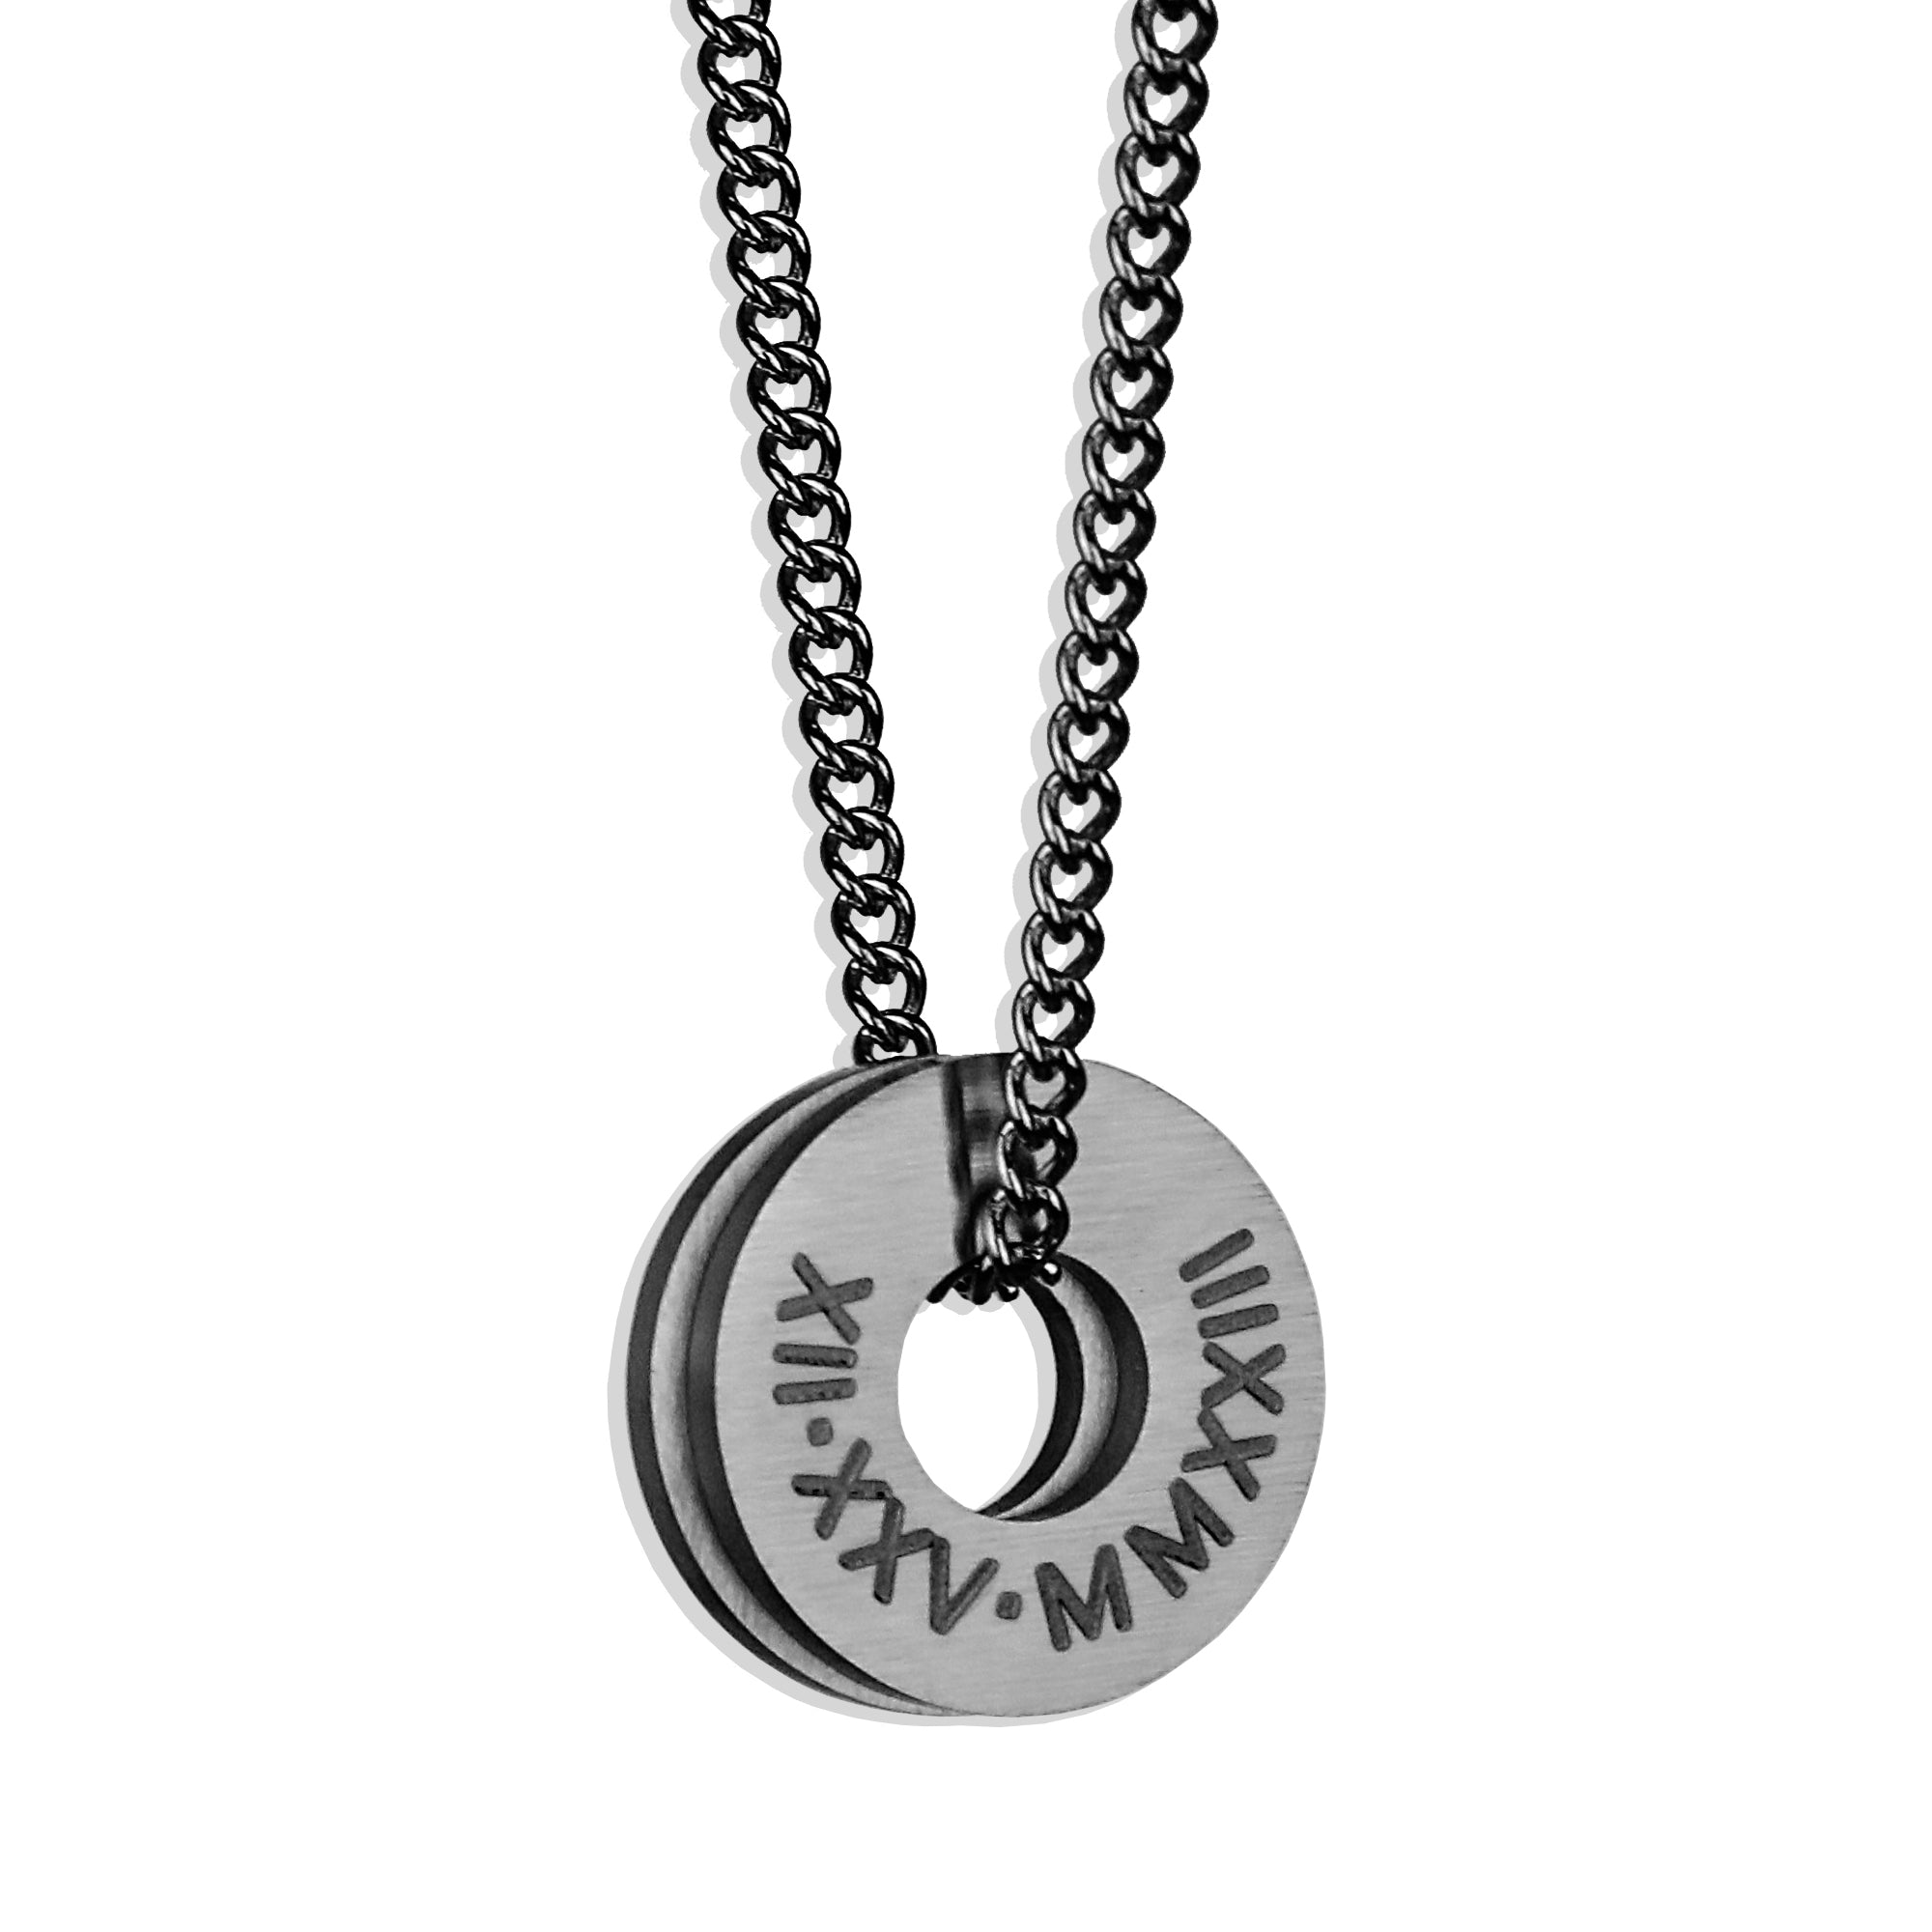 Small Circle Necklace - Matte Silver